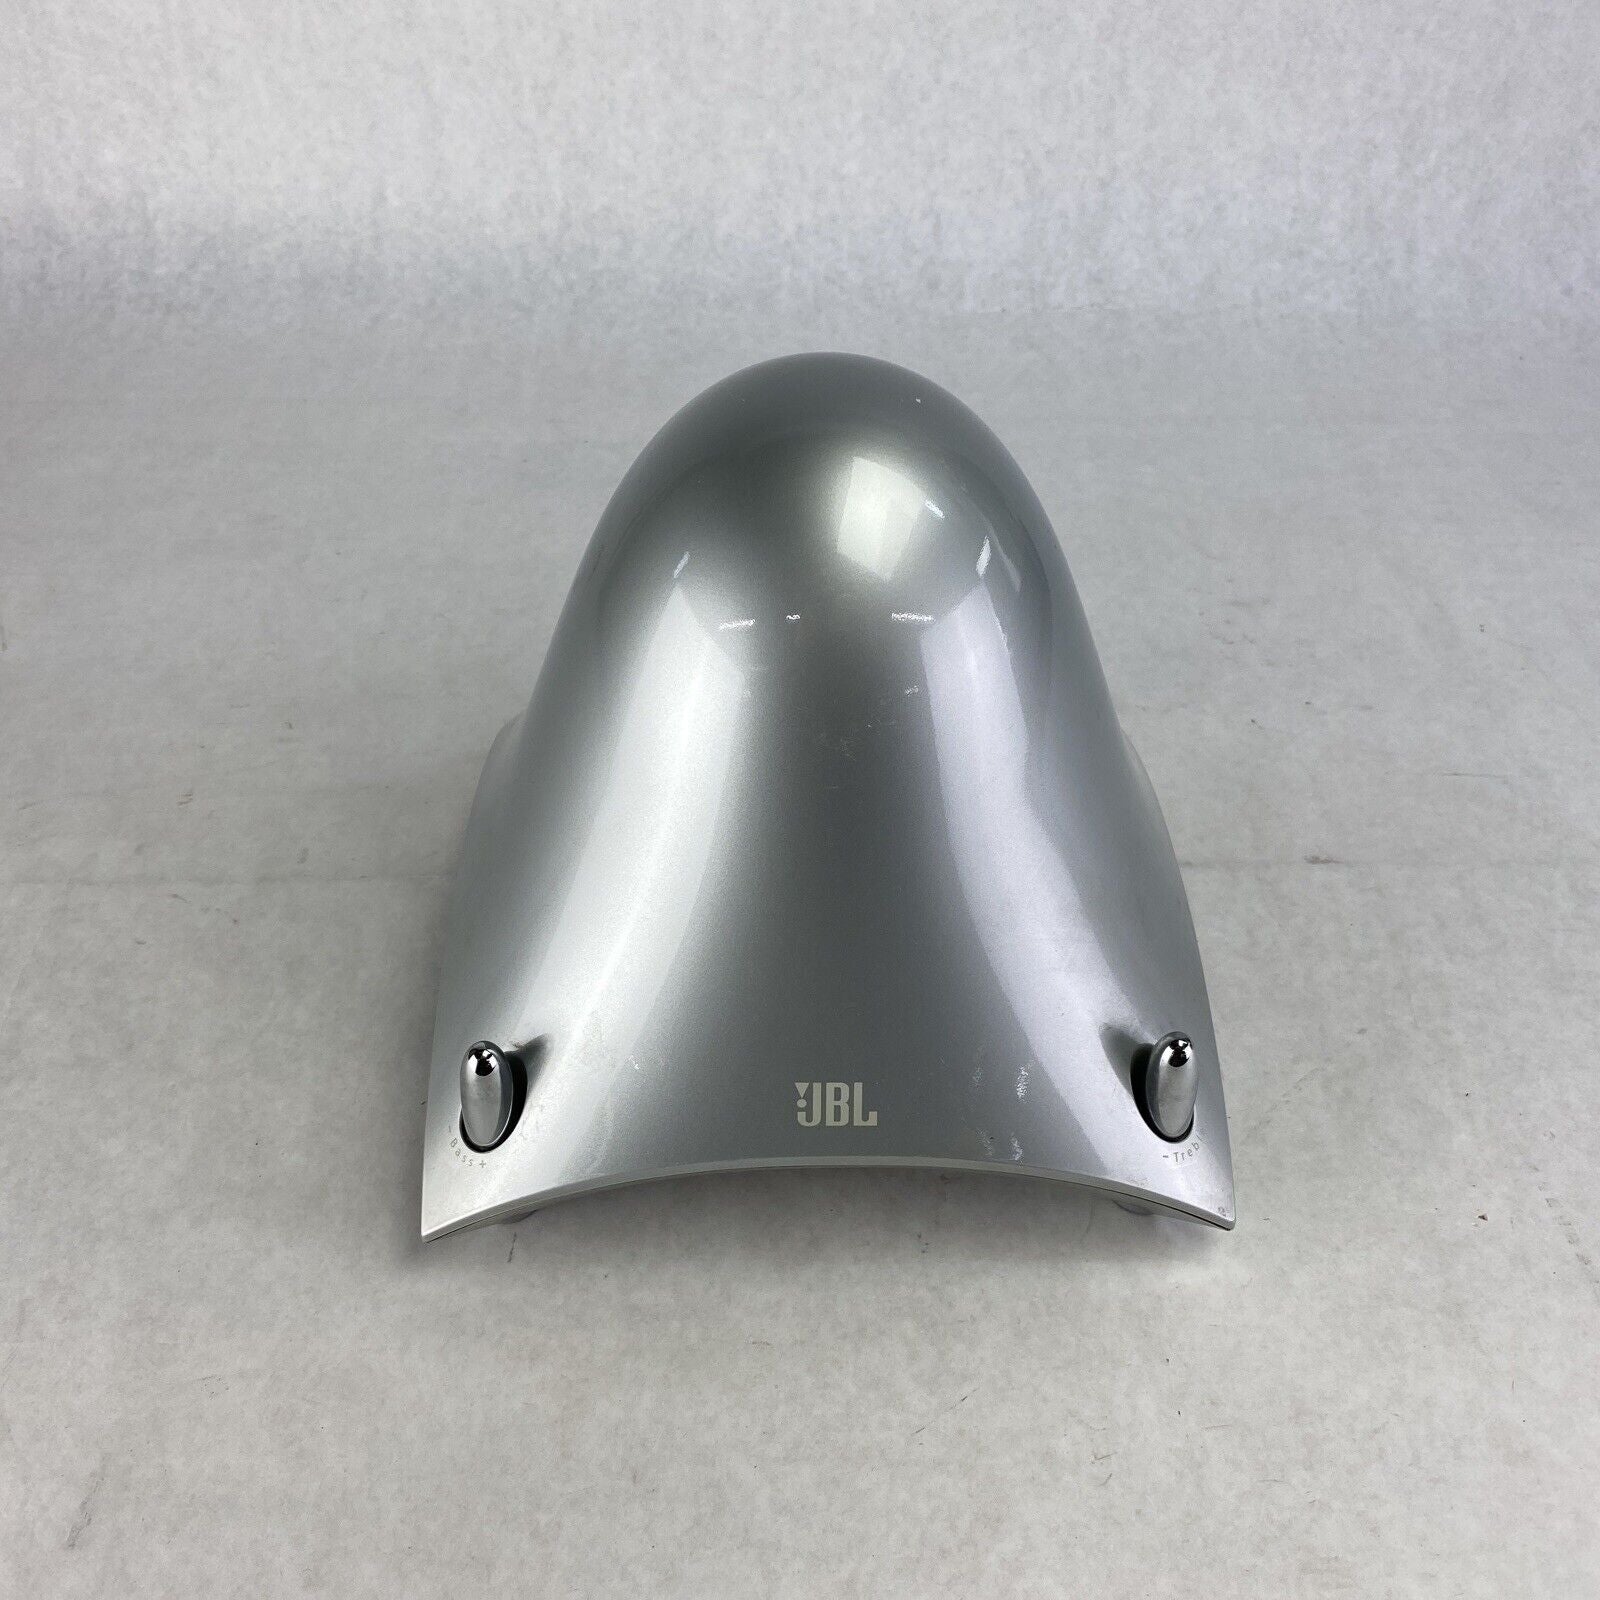 JBL Silver Creature Speaker No PSU -Untested